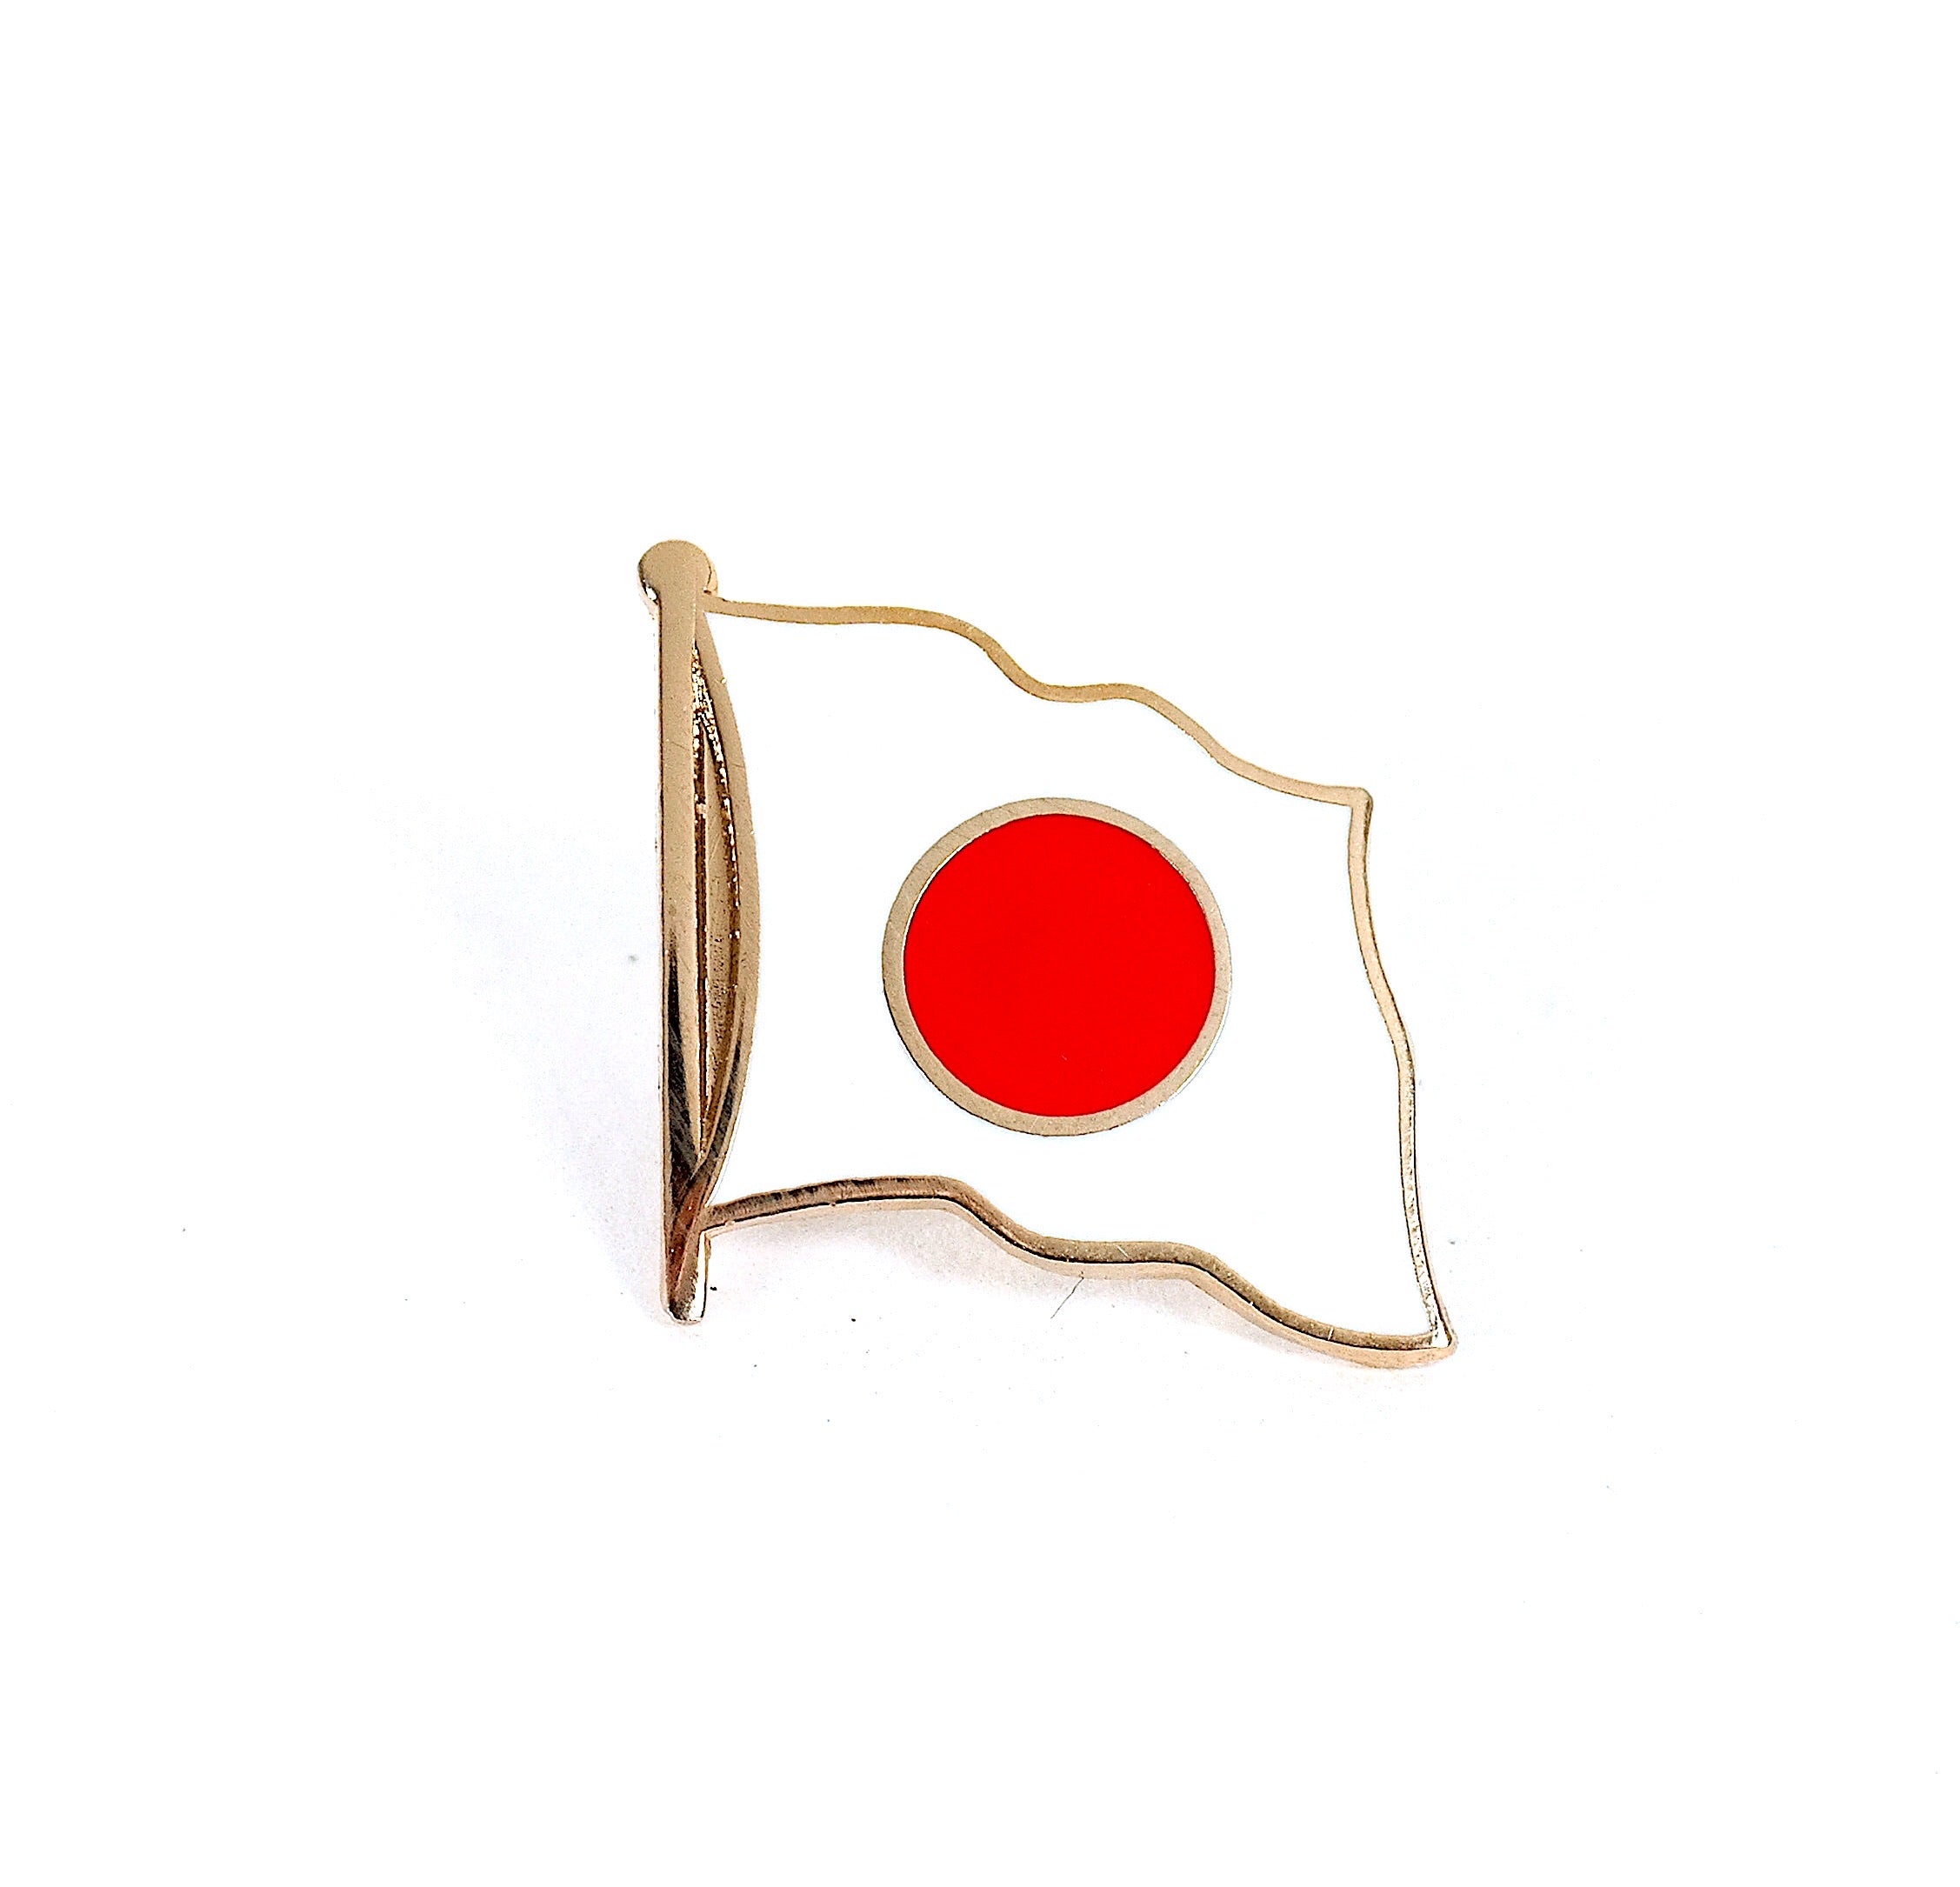 Japan Flag Lapel Pin